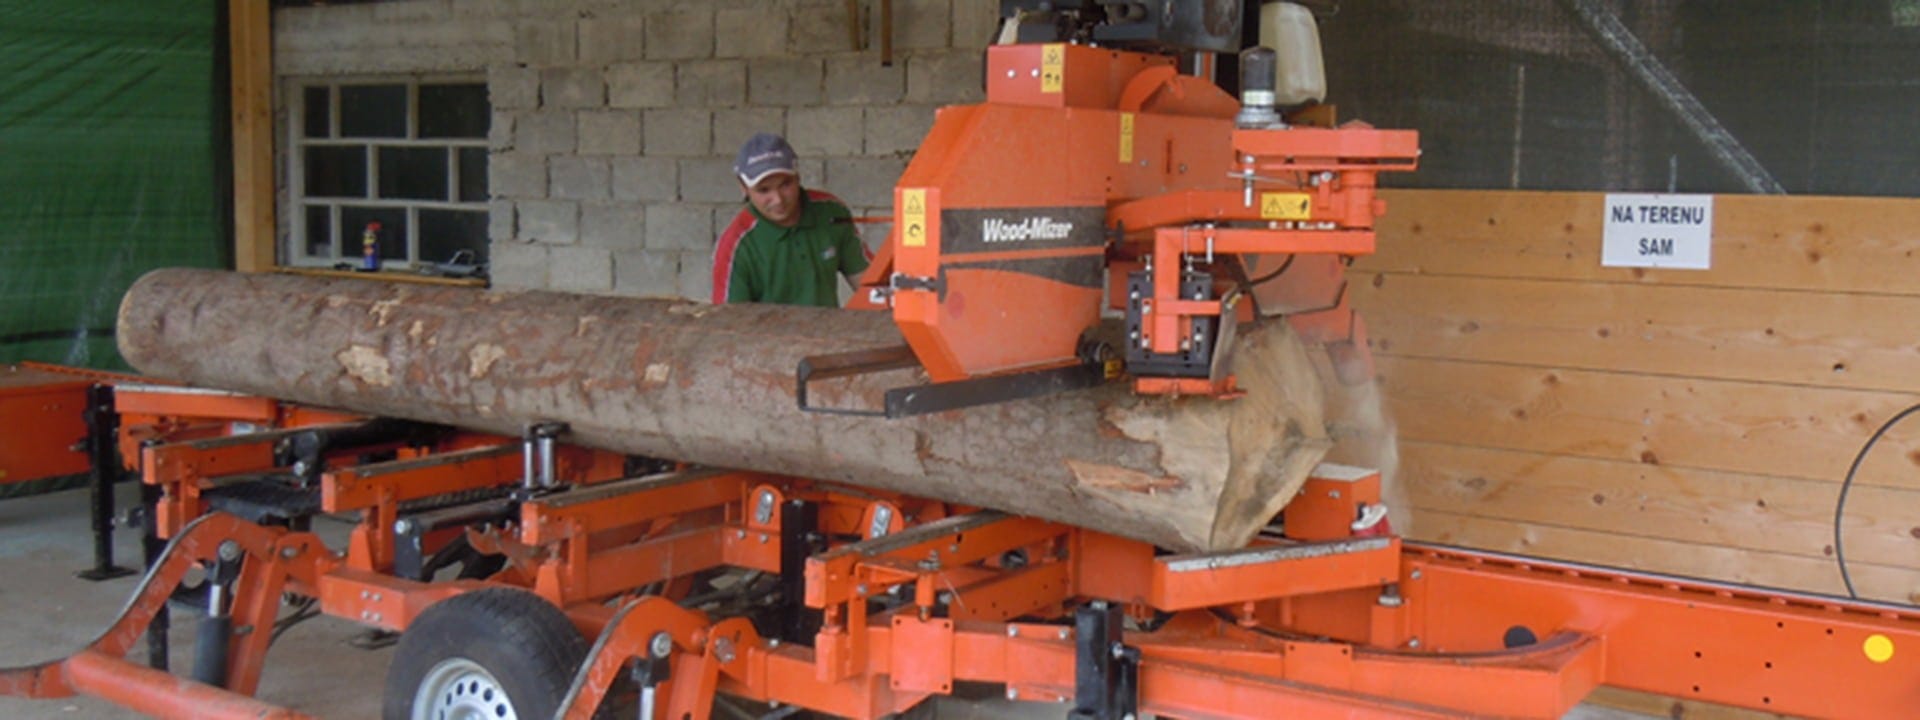 Logs prepared for sawmilling